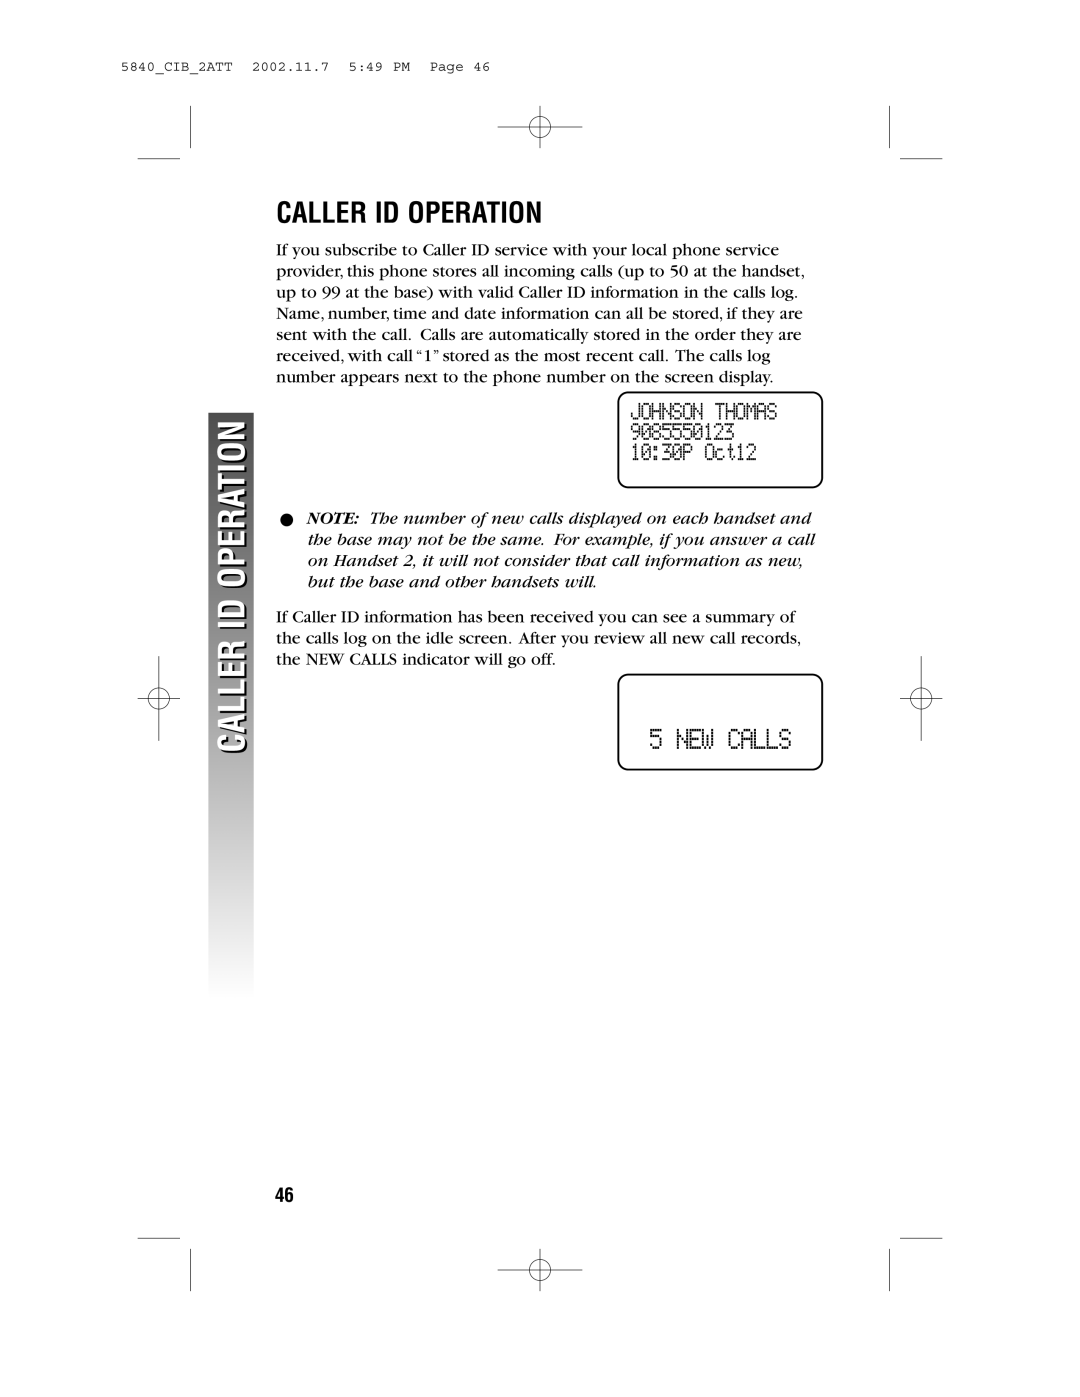 AT&T 5840 user manual Caller Id Operation, New Calls 